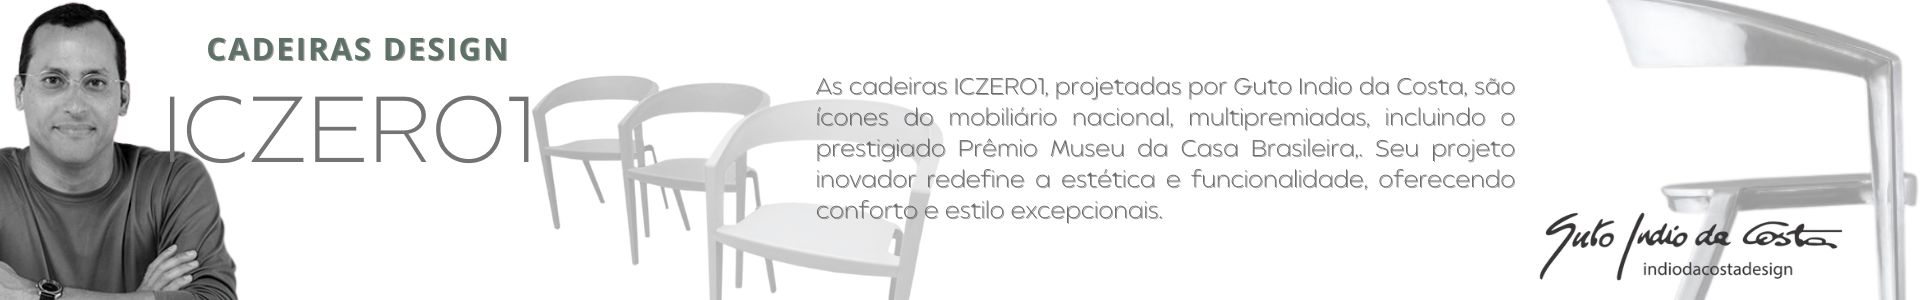 Cadeiras Design ICZero1 By Indio da Costa